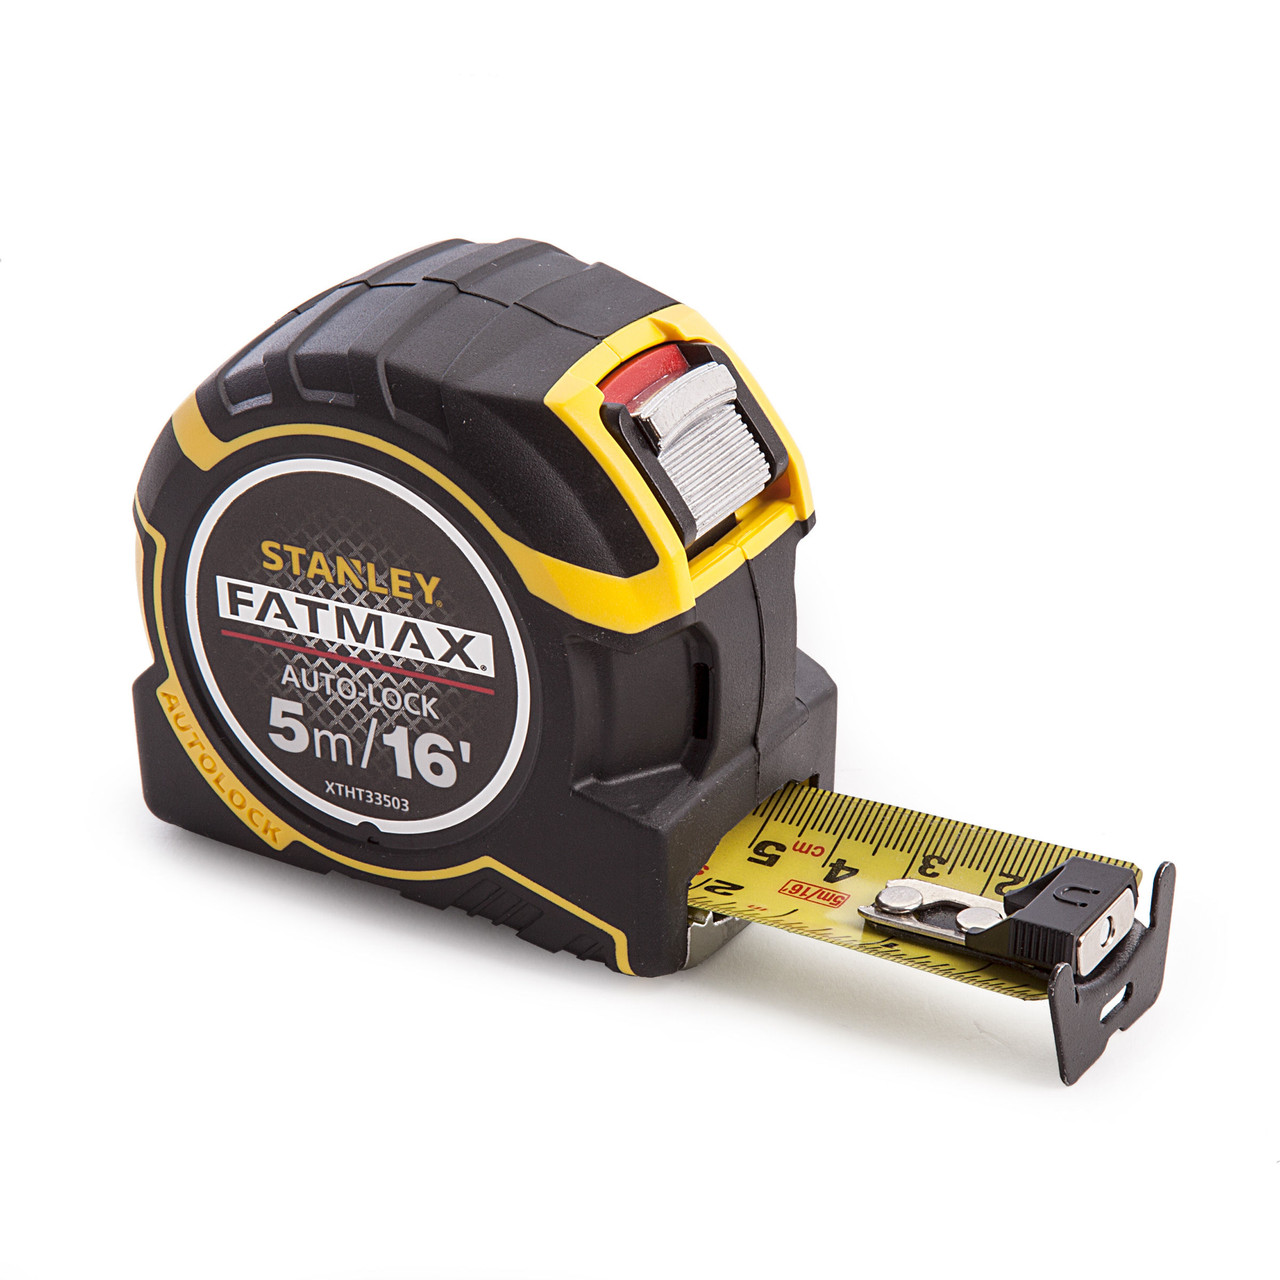 Photos - Tape Measure and Surveyor Tape Stanley XTHT0-33503 Fatmax Autolock Tape 5m / 16ft 